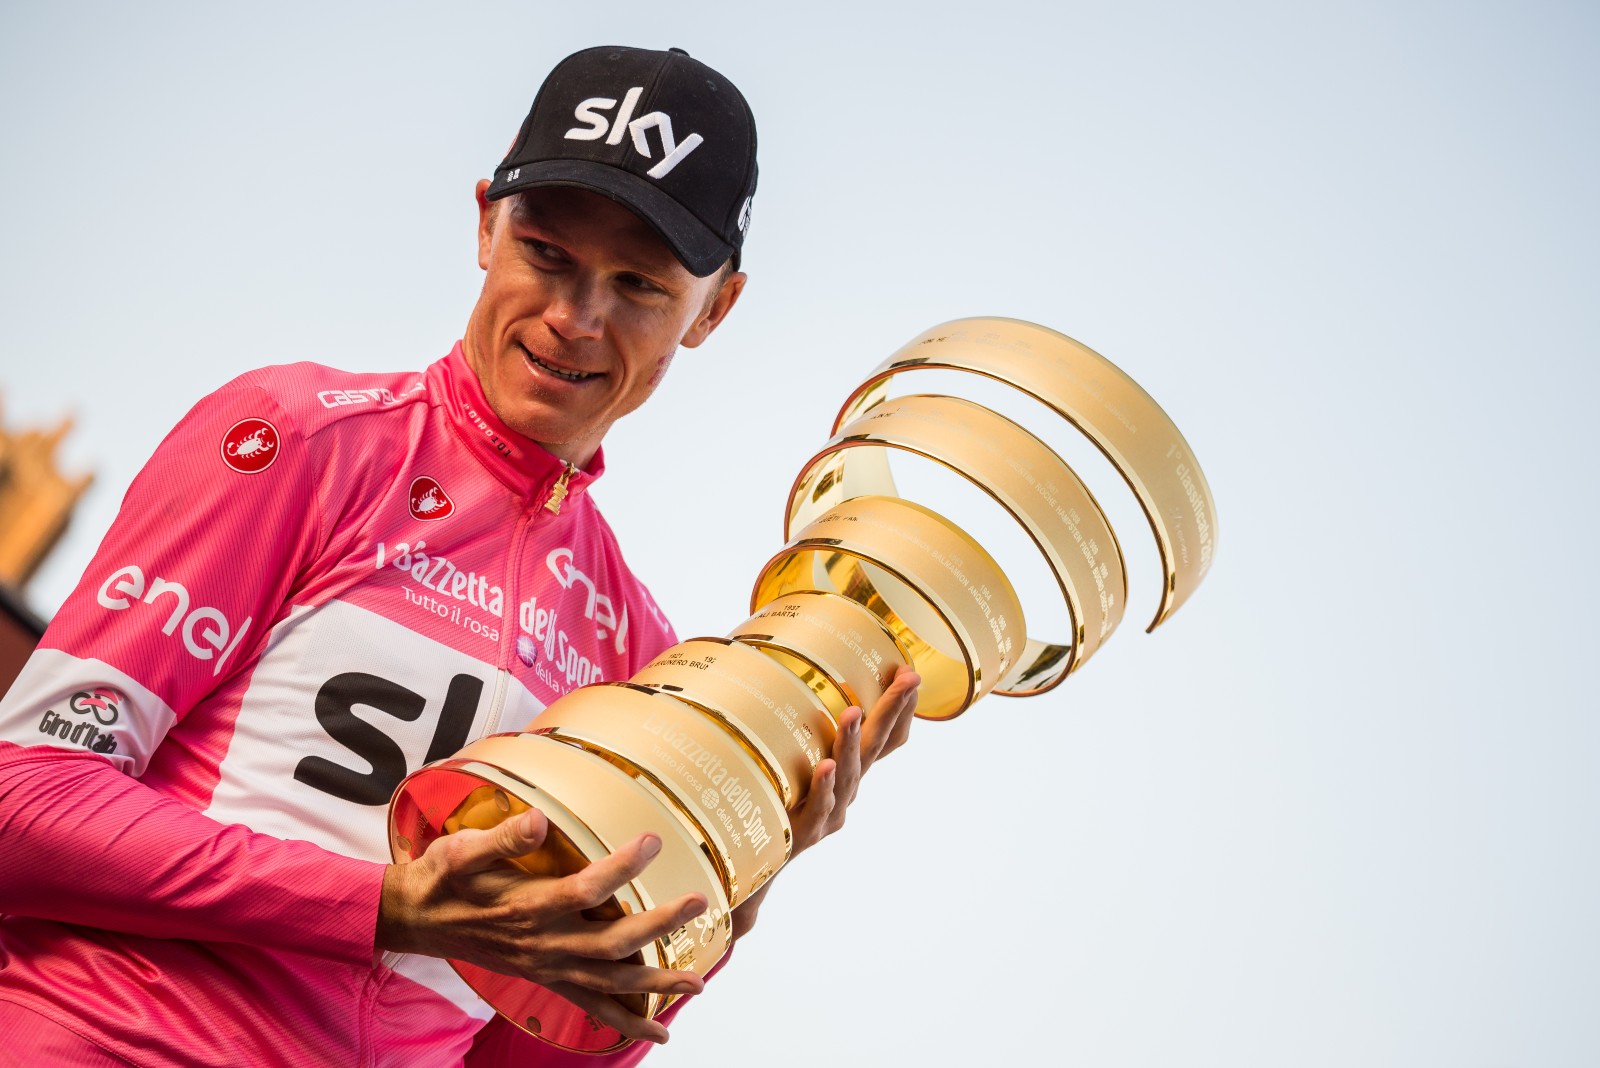 Chris Froome celebrates winning the 101st Giro D'Italia in 2018 in Rome. Photo by Nicola Devecchi via Shutterstock.com